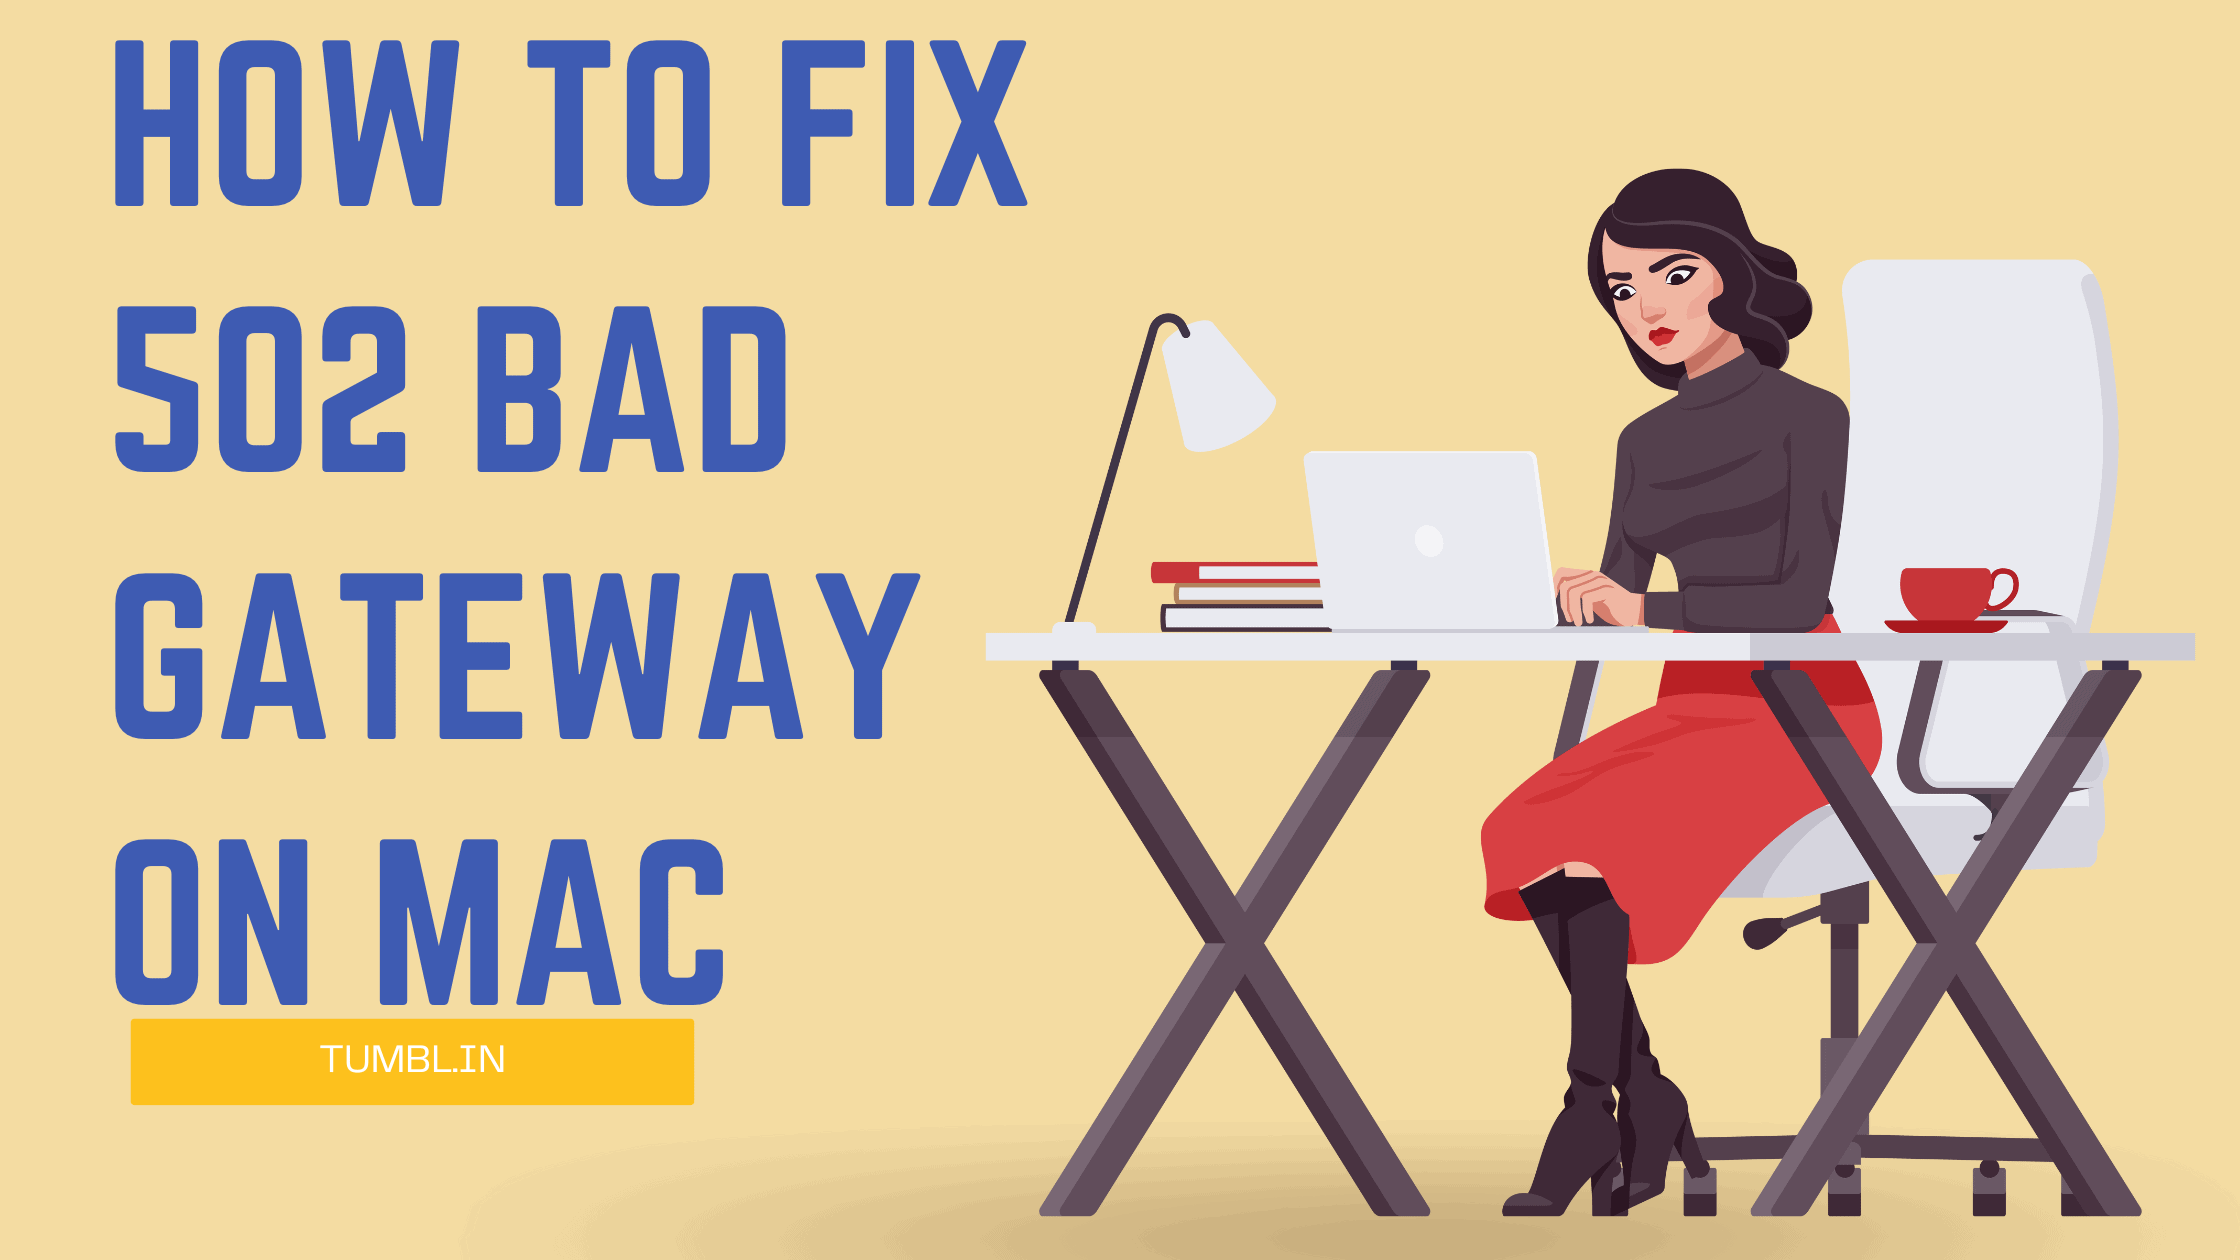 how to fix 502 bad gateway on mac